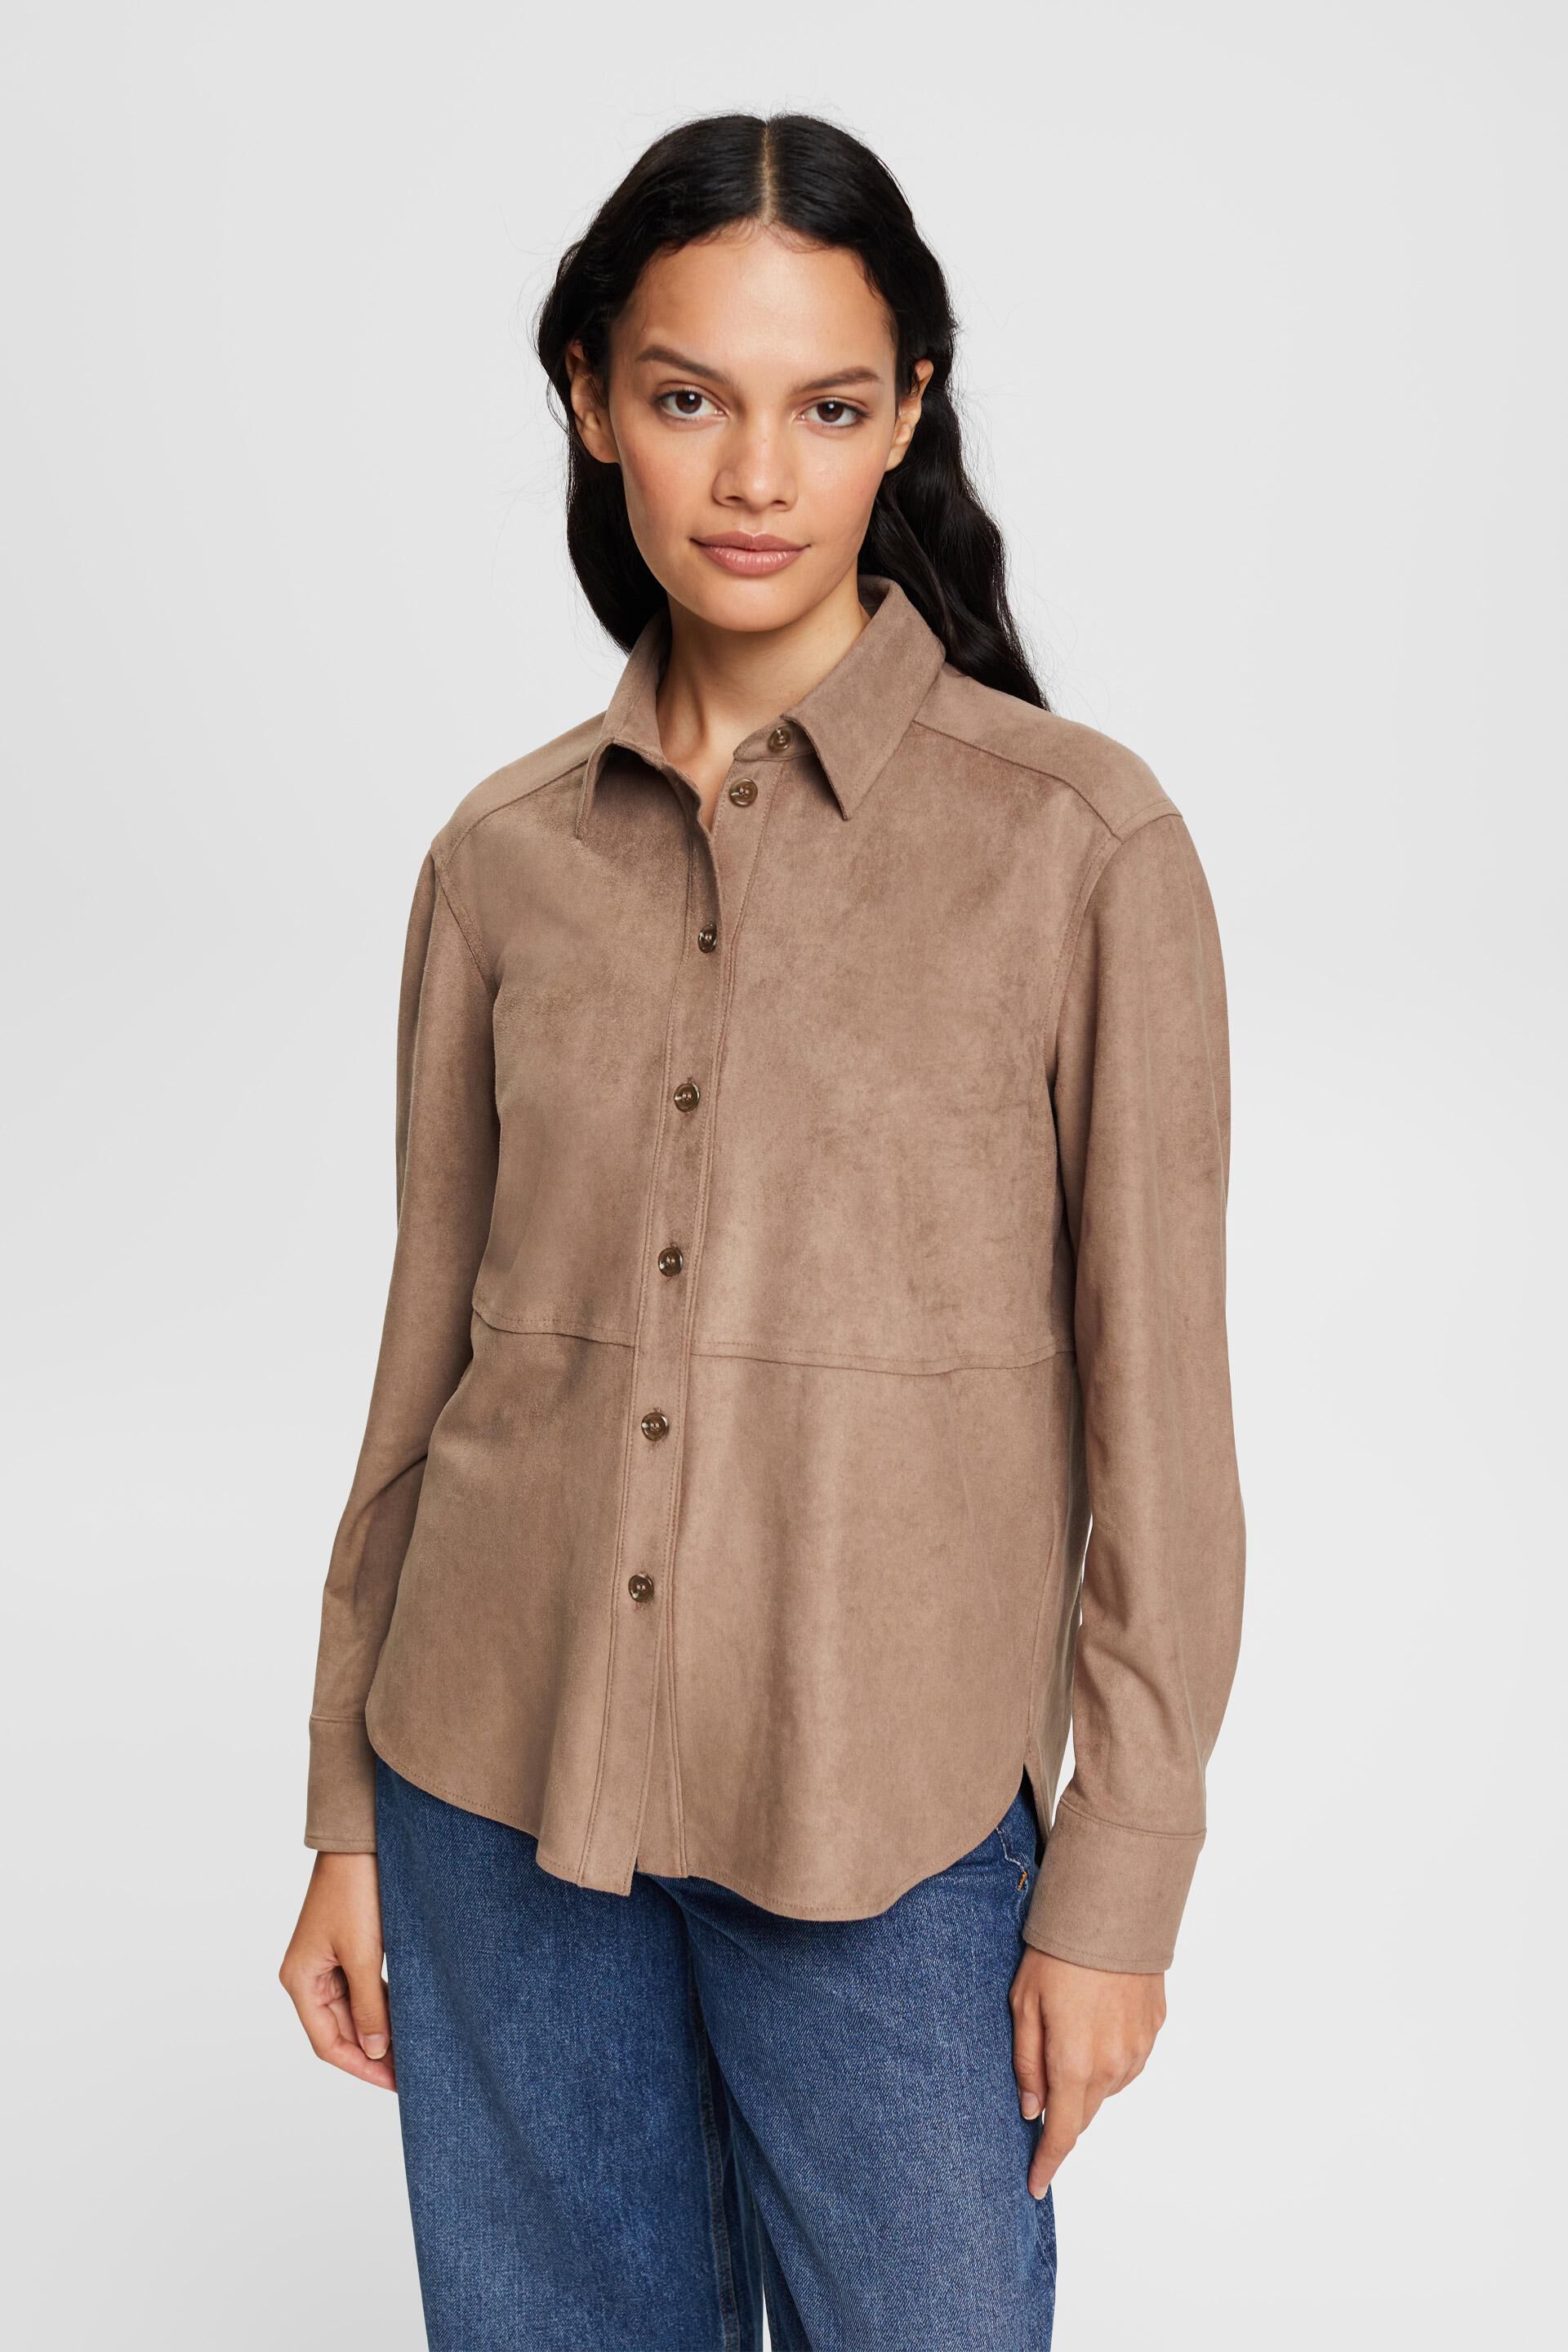 Caroll Slip-over blouse bruin zakelijke stijl Mode Blouses Slip-over blouses 